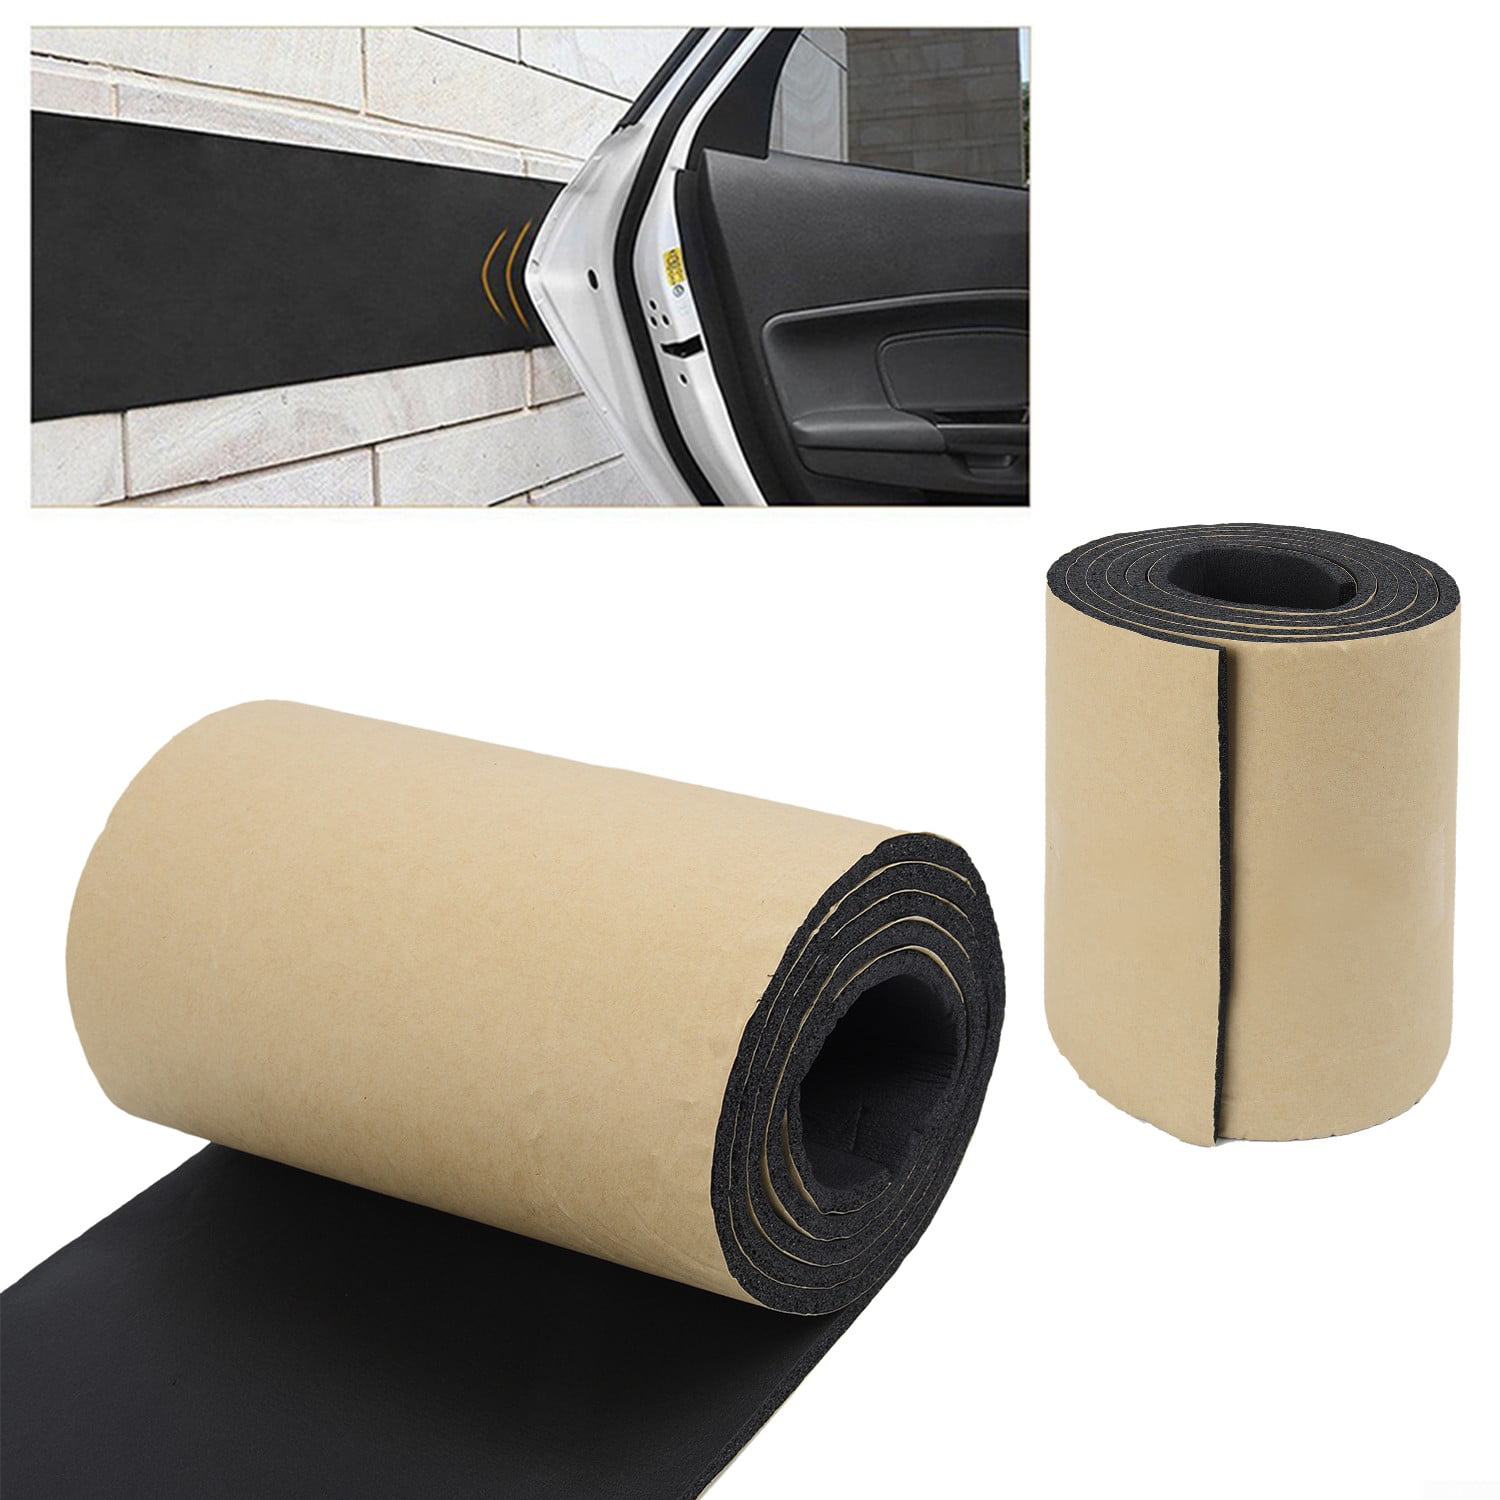 SING F LTD Car Door Anti Scratch Self Adhesive Foam Parking Protector for Garage Wall Black 